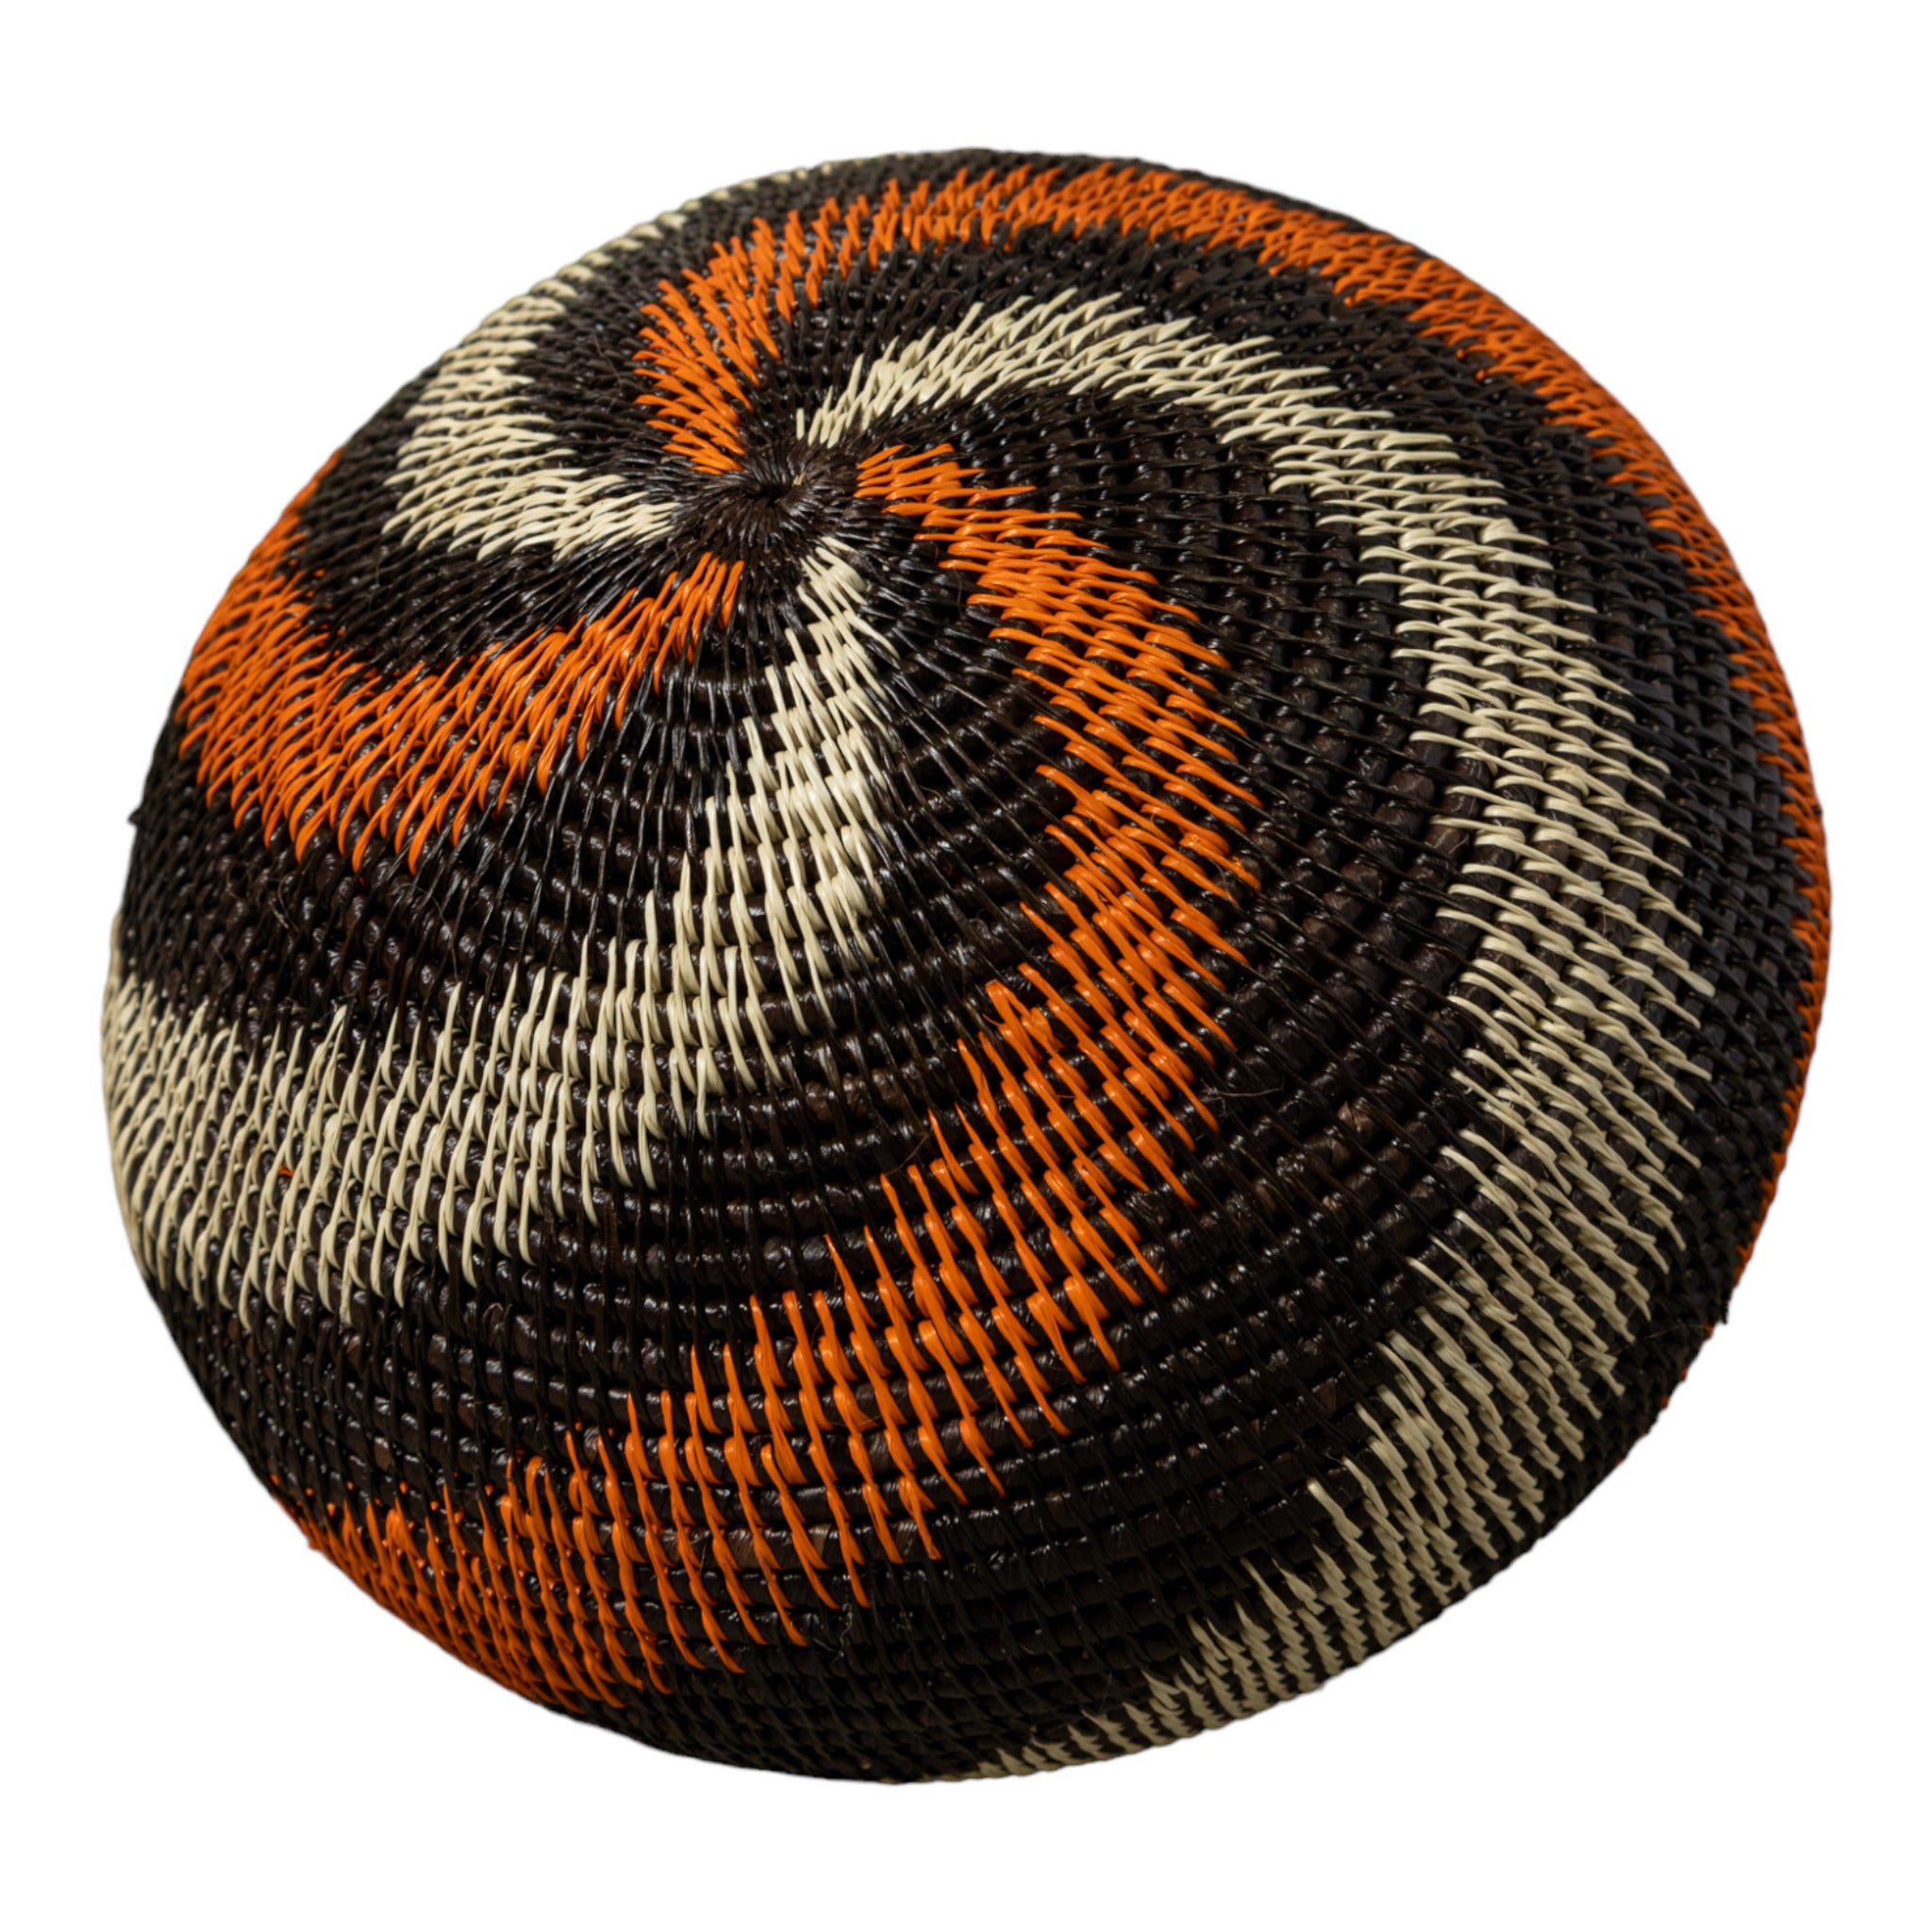 Black Orange And White Spiral Rainforest Basket With Top